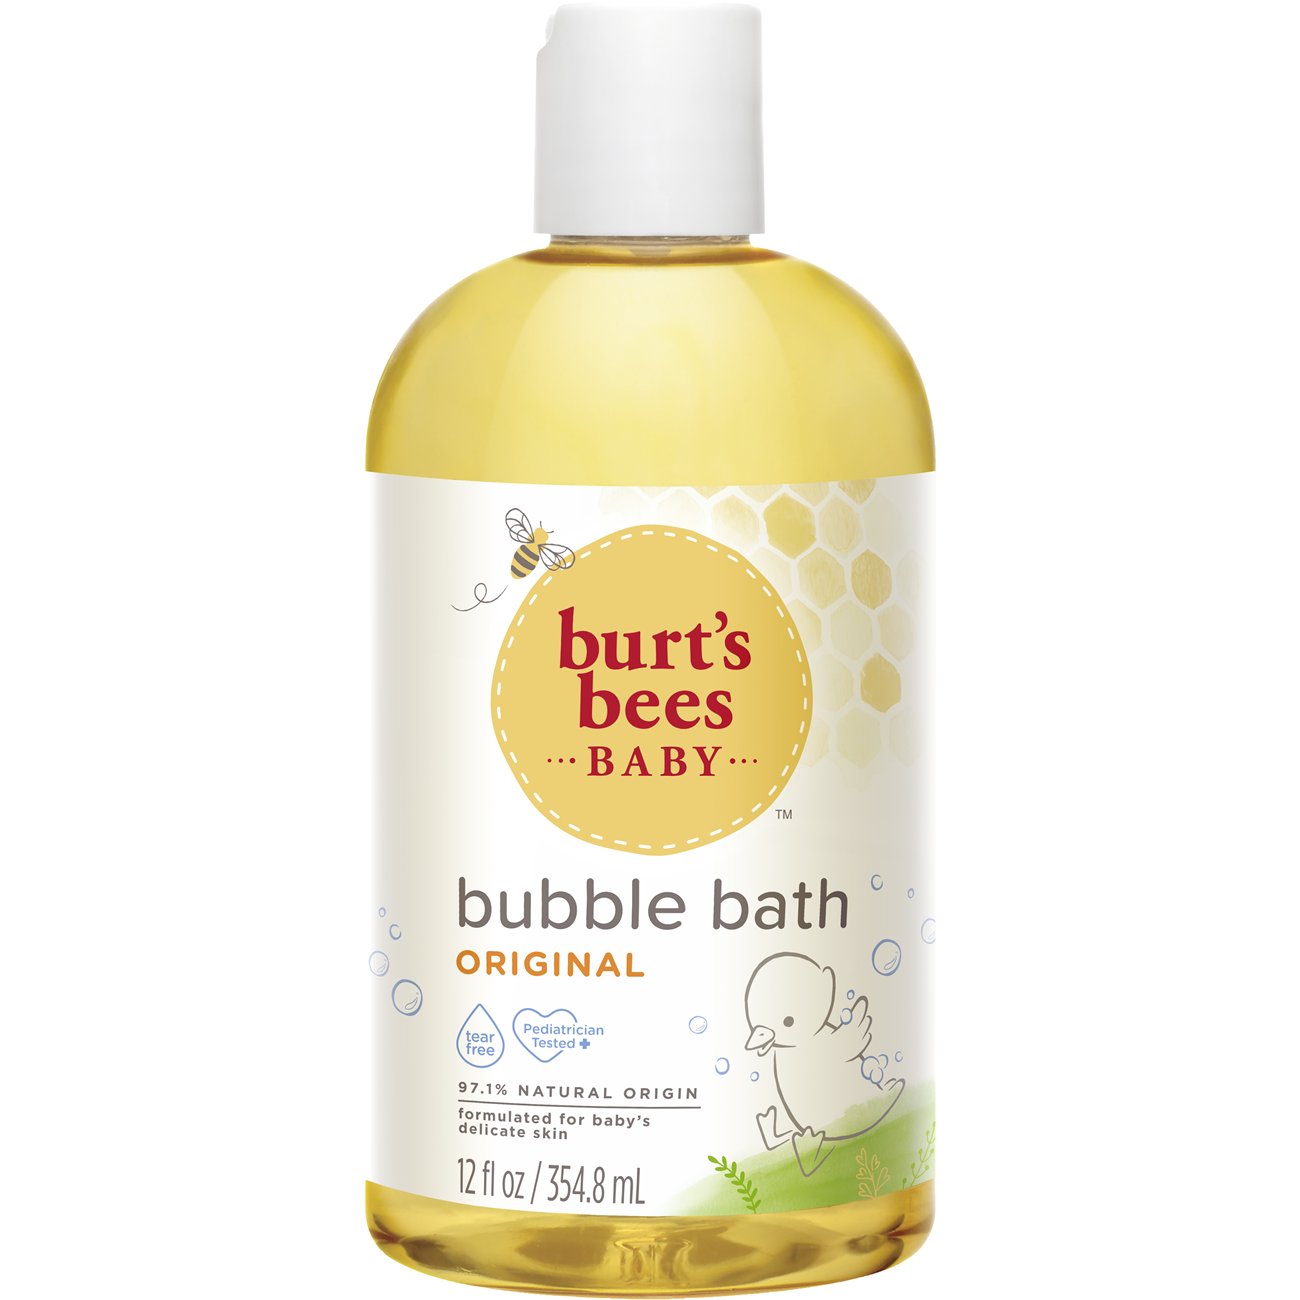 Burt's Bees Baby Bubble Bath 354.8ml